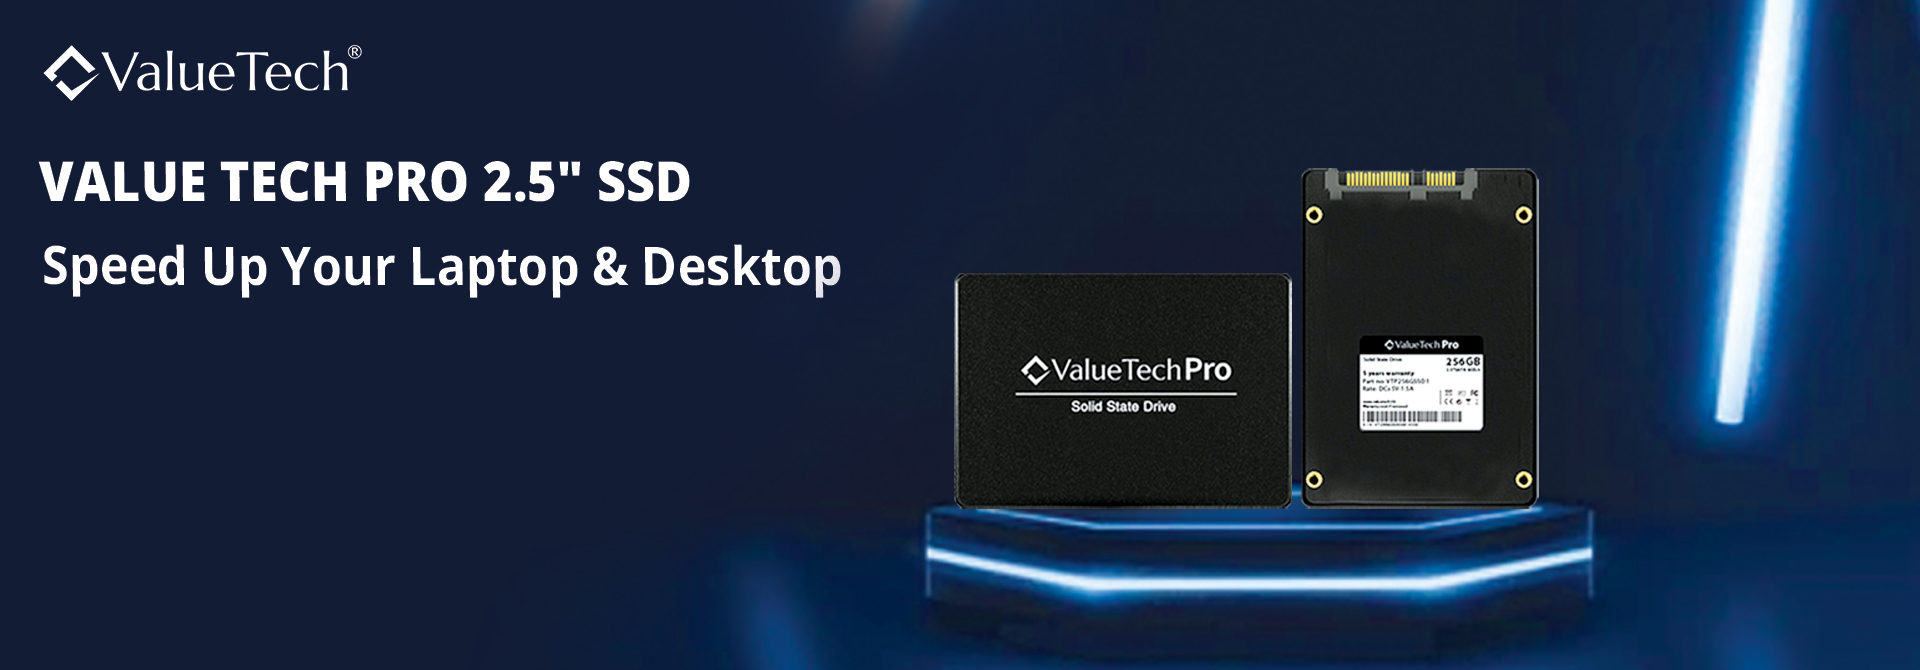 ValueTech Pro 2.5" SSD